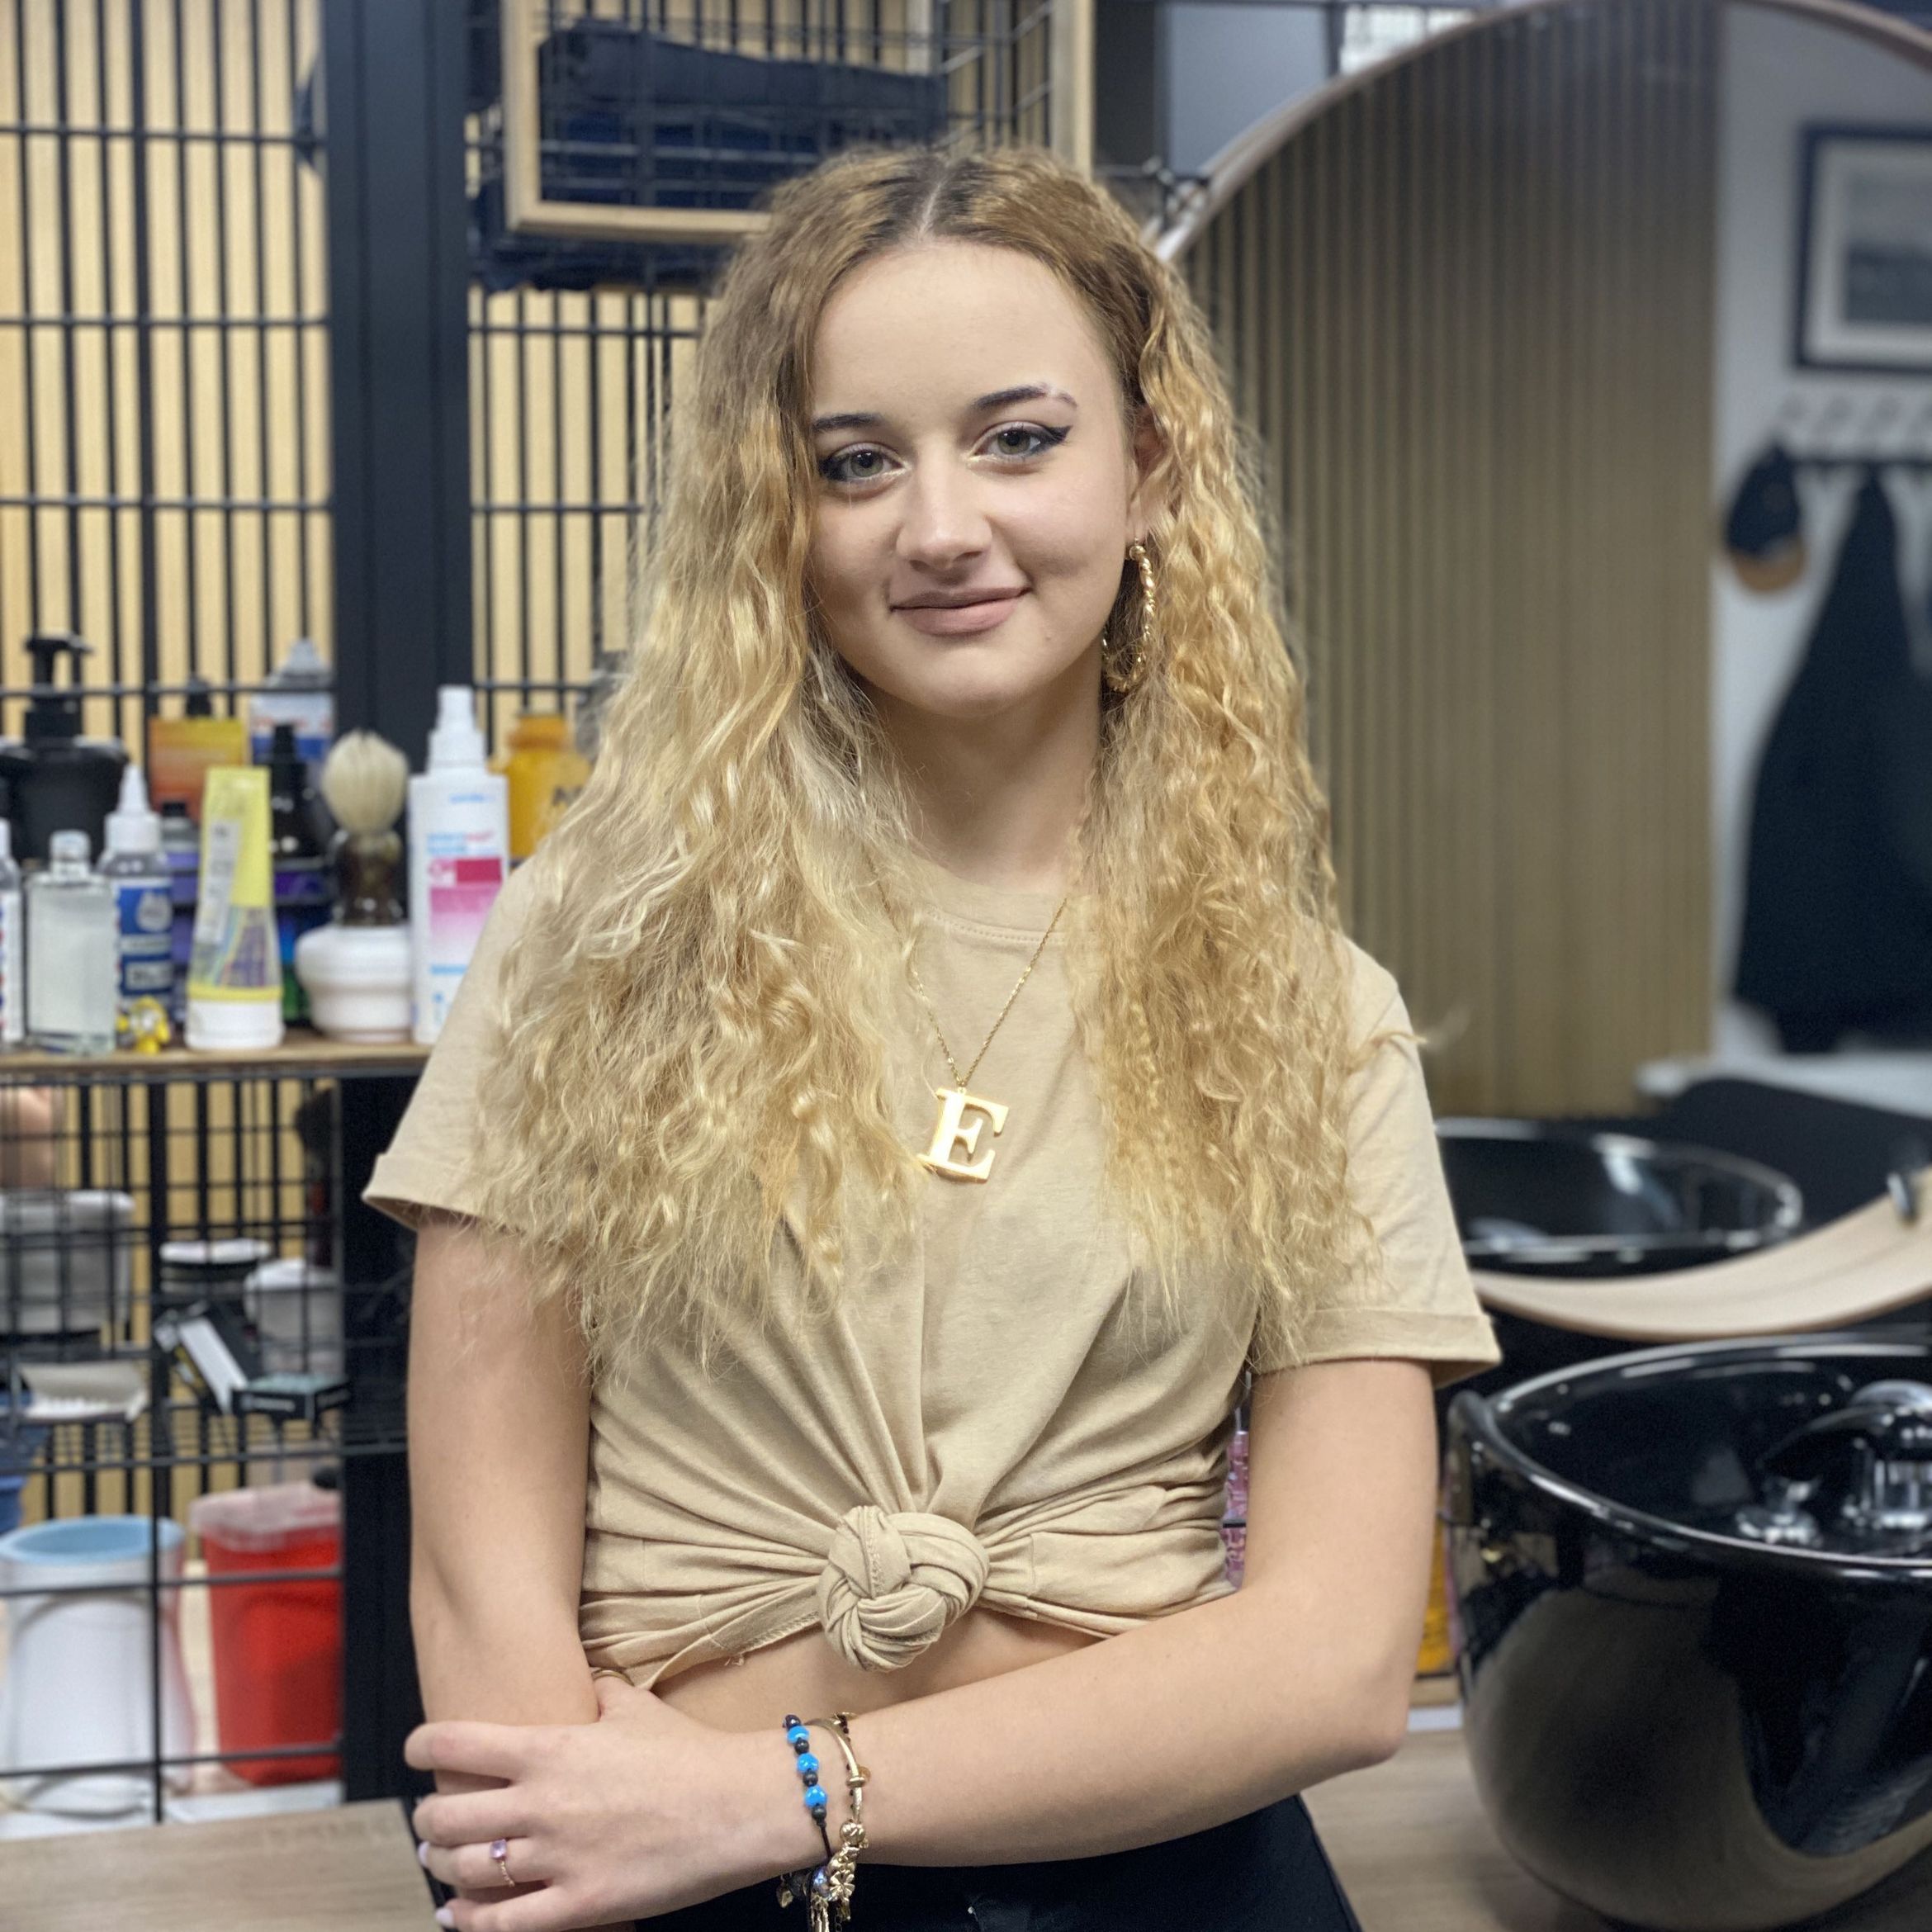 Emilka/ szkolenie - Barber Shop ŁOTR Opole - OLESKA 33